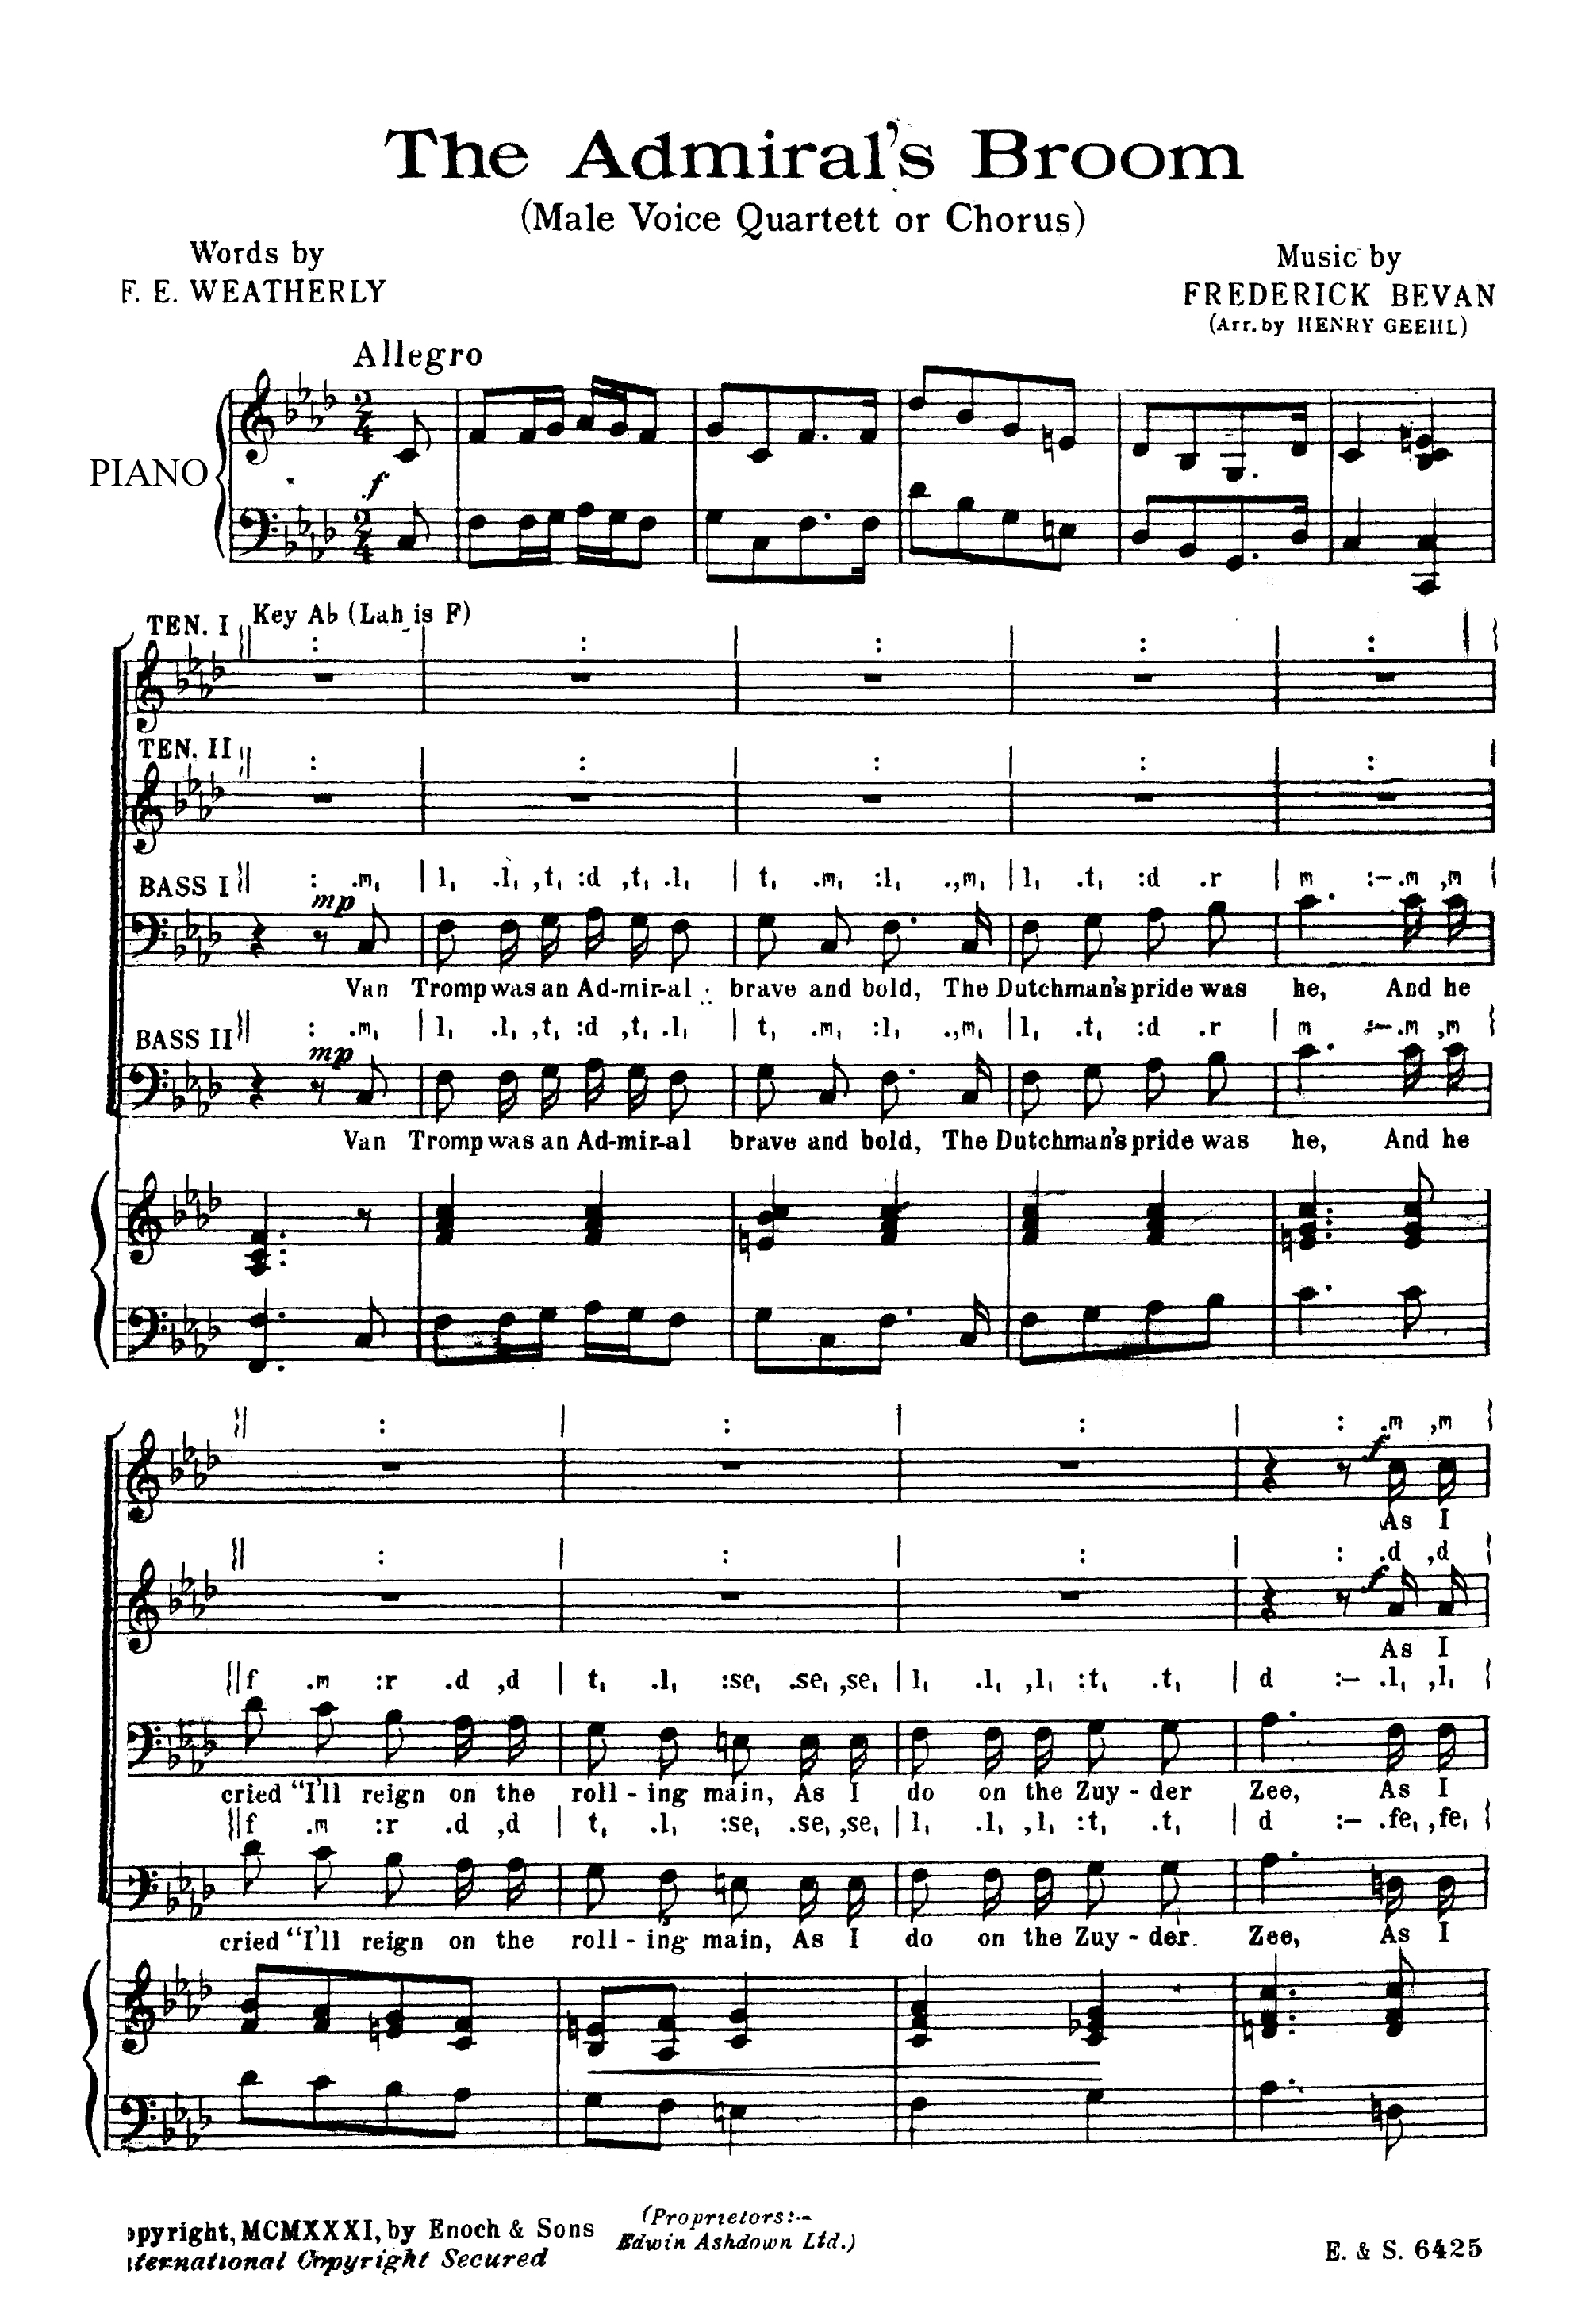 Frederick Bevan: The Admirals Broom: TTBB: Vocal Score